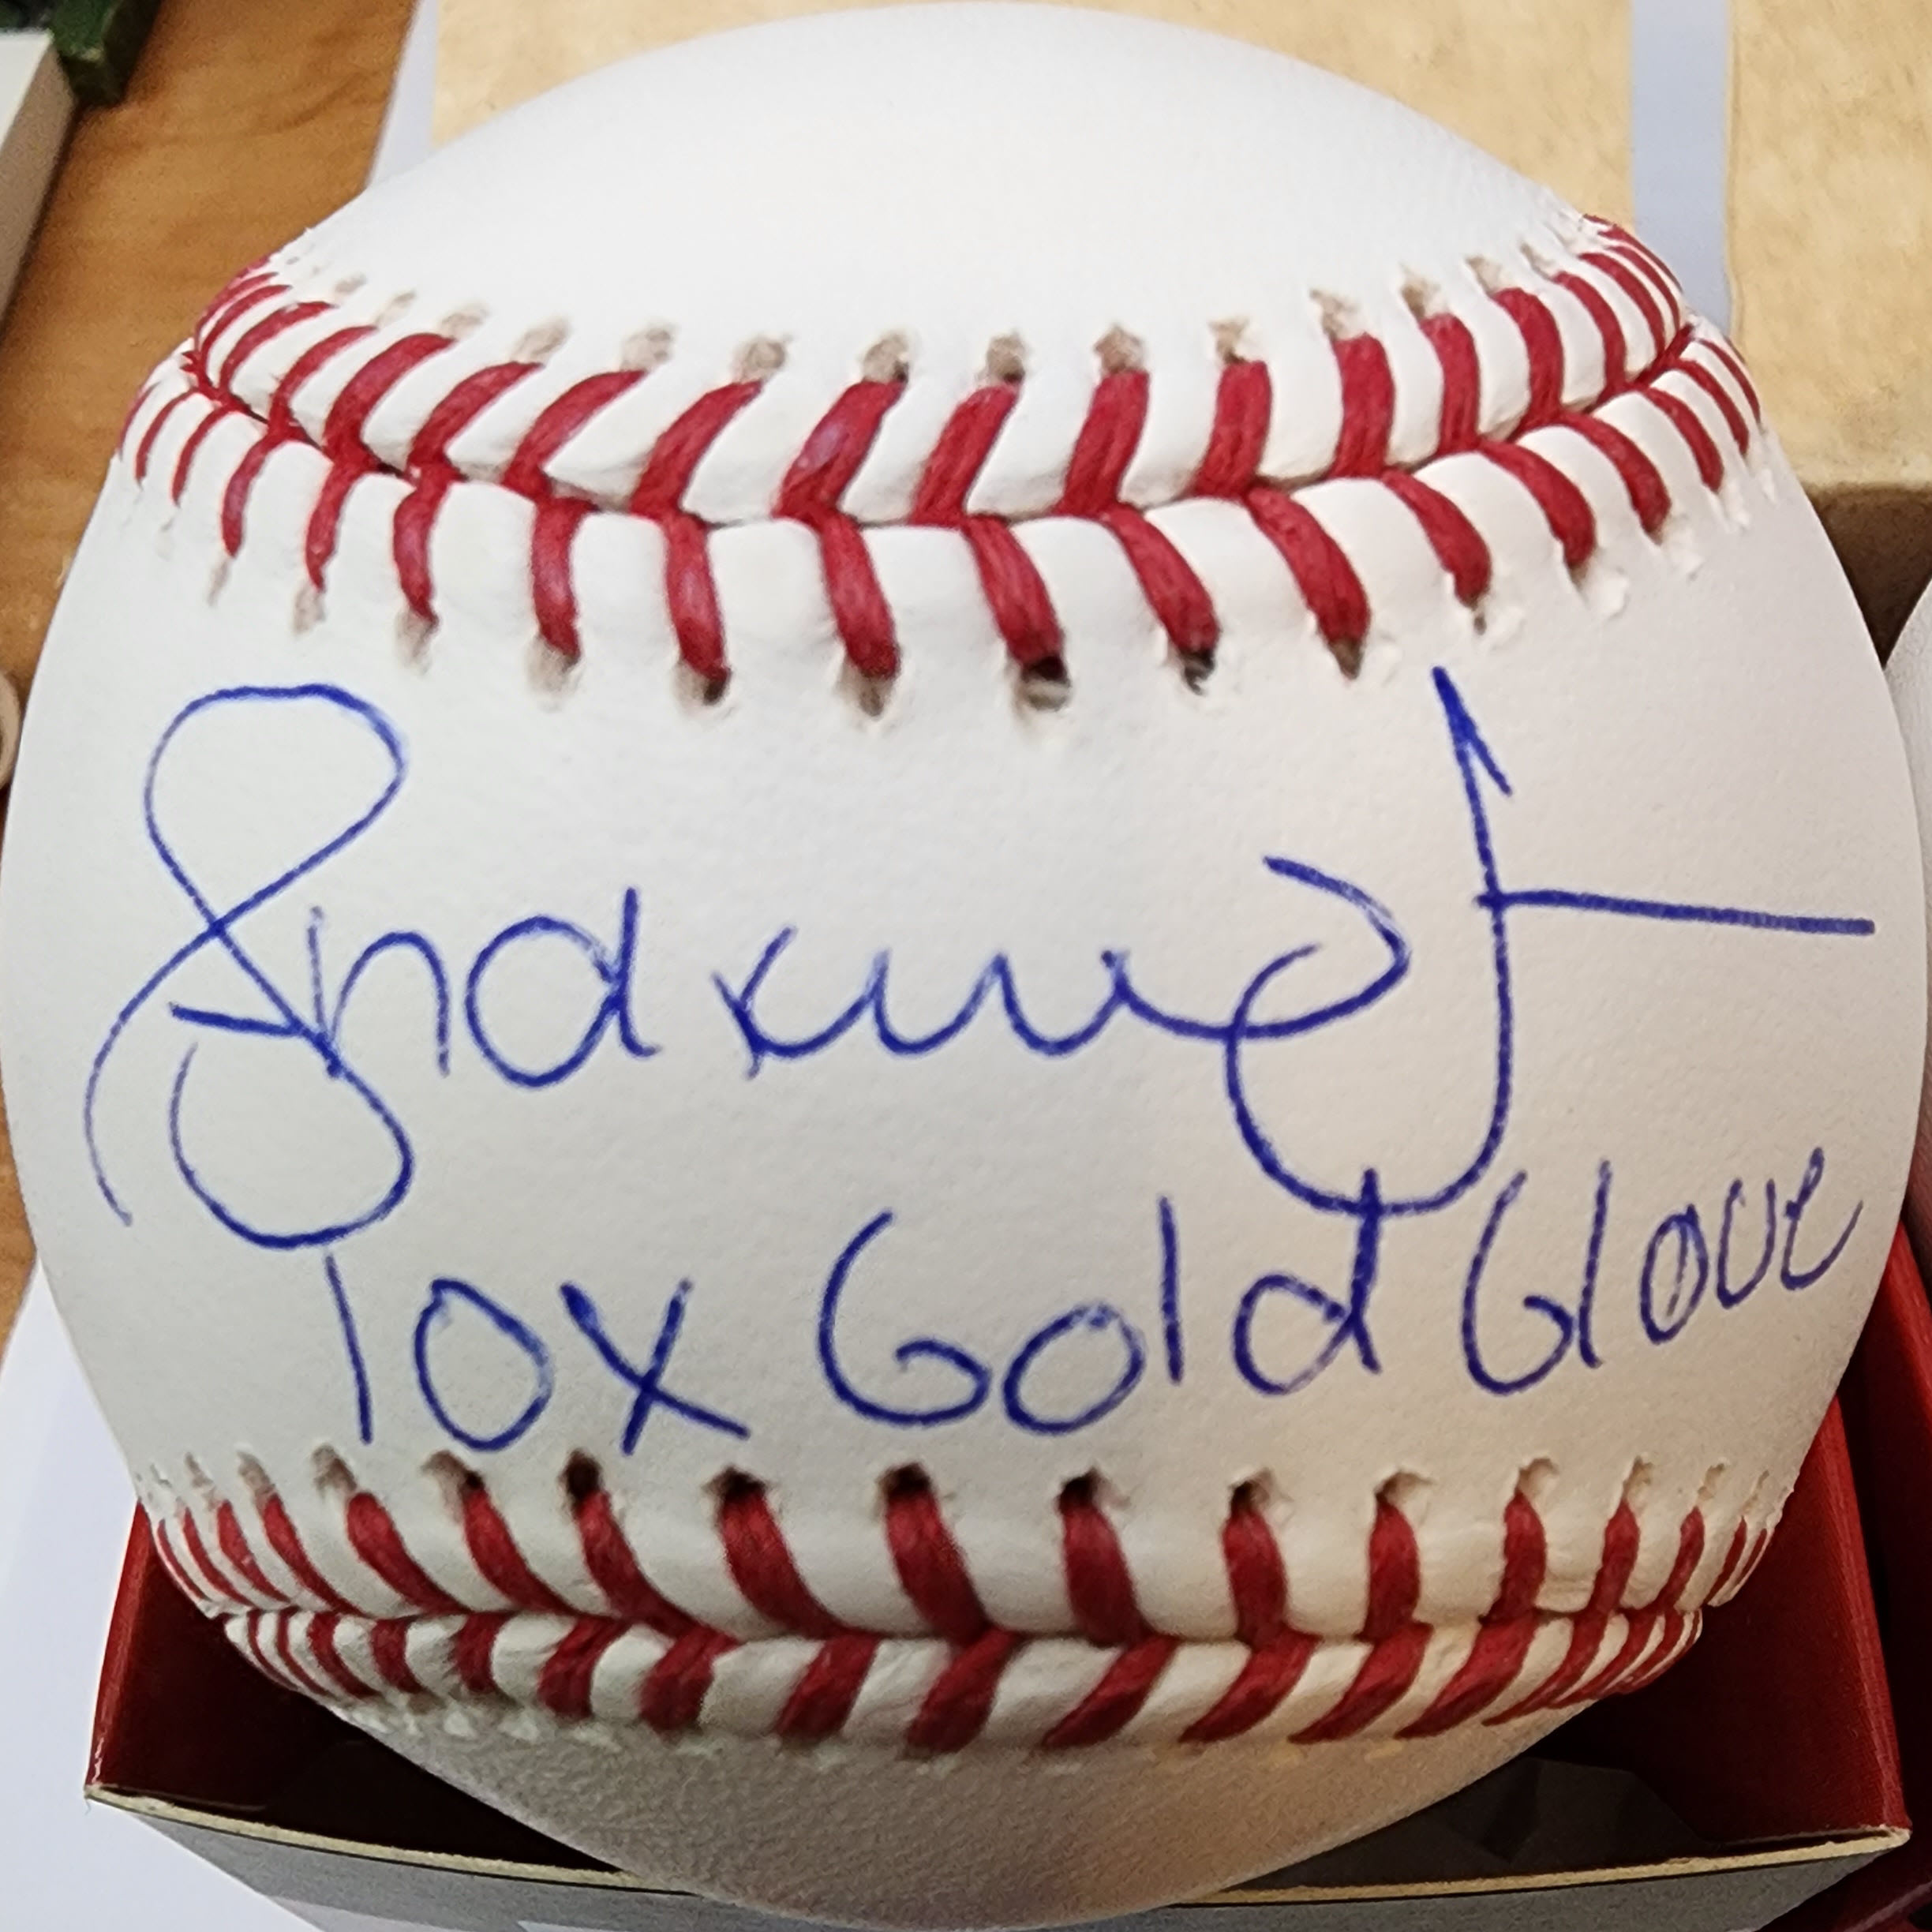 Andruw Jones Autrographed OMLB Baseball 10X Gold Glove Inscription 1